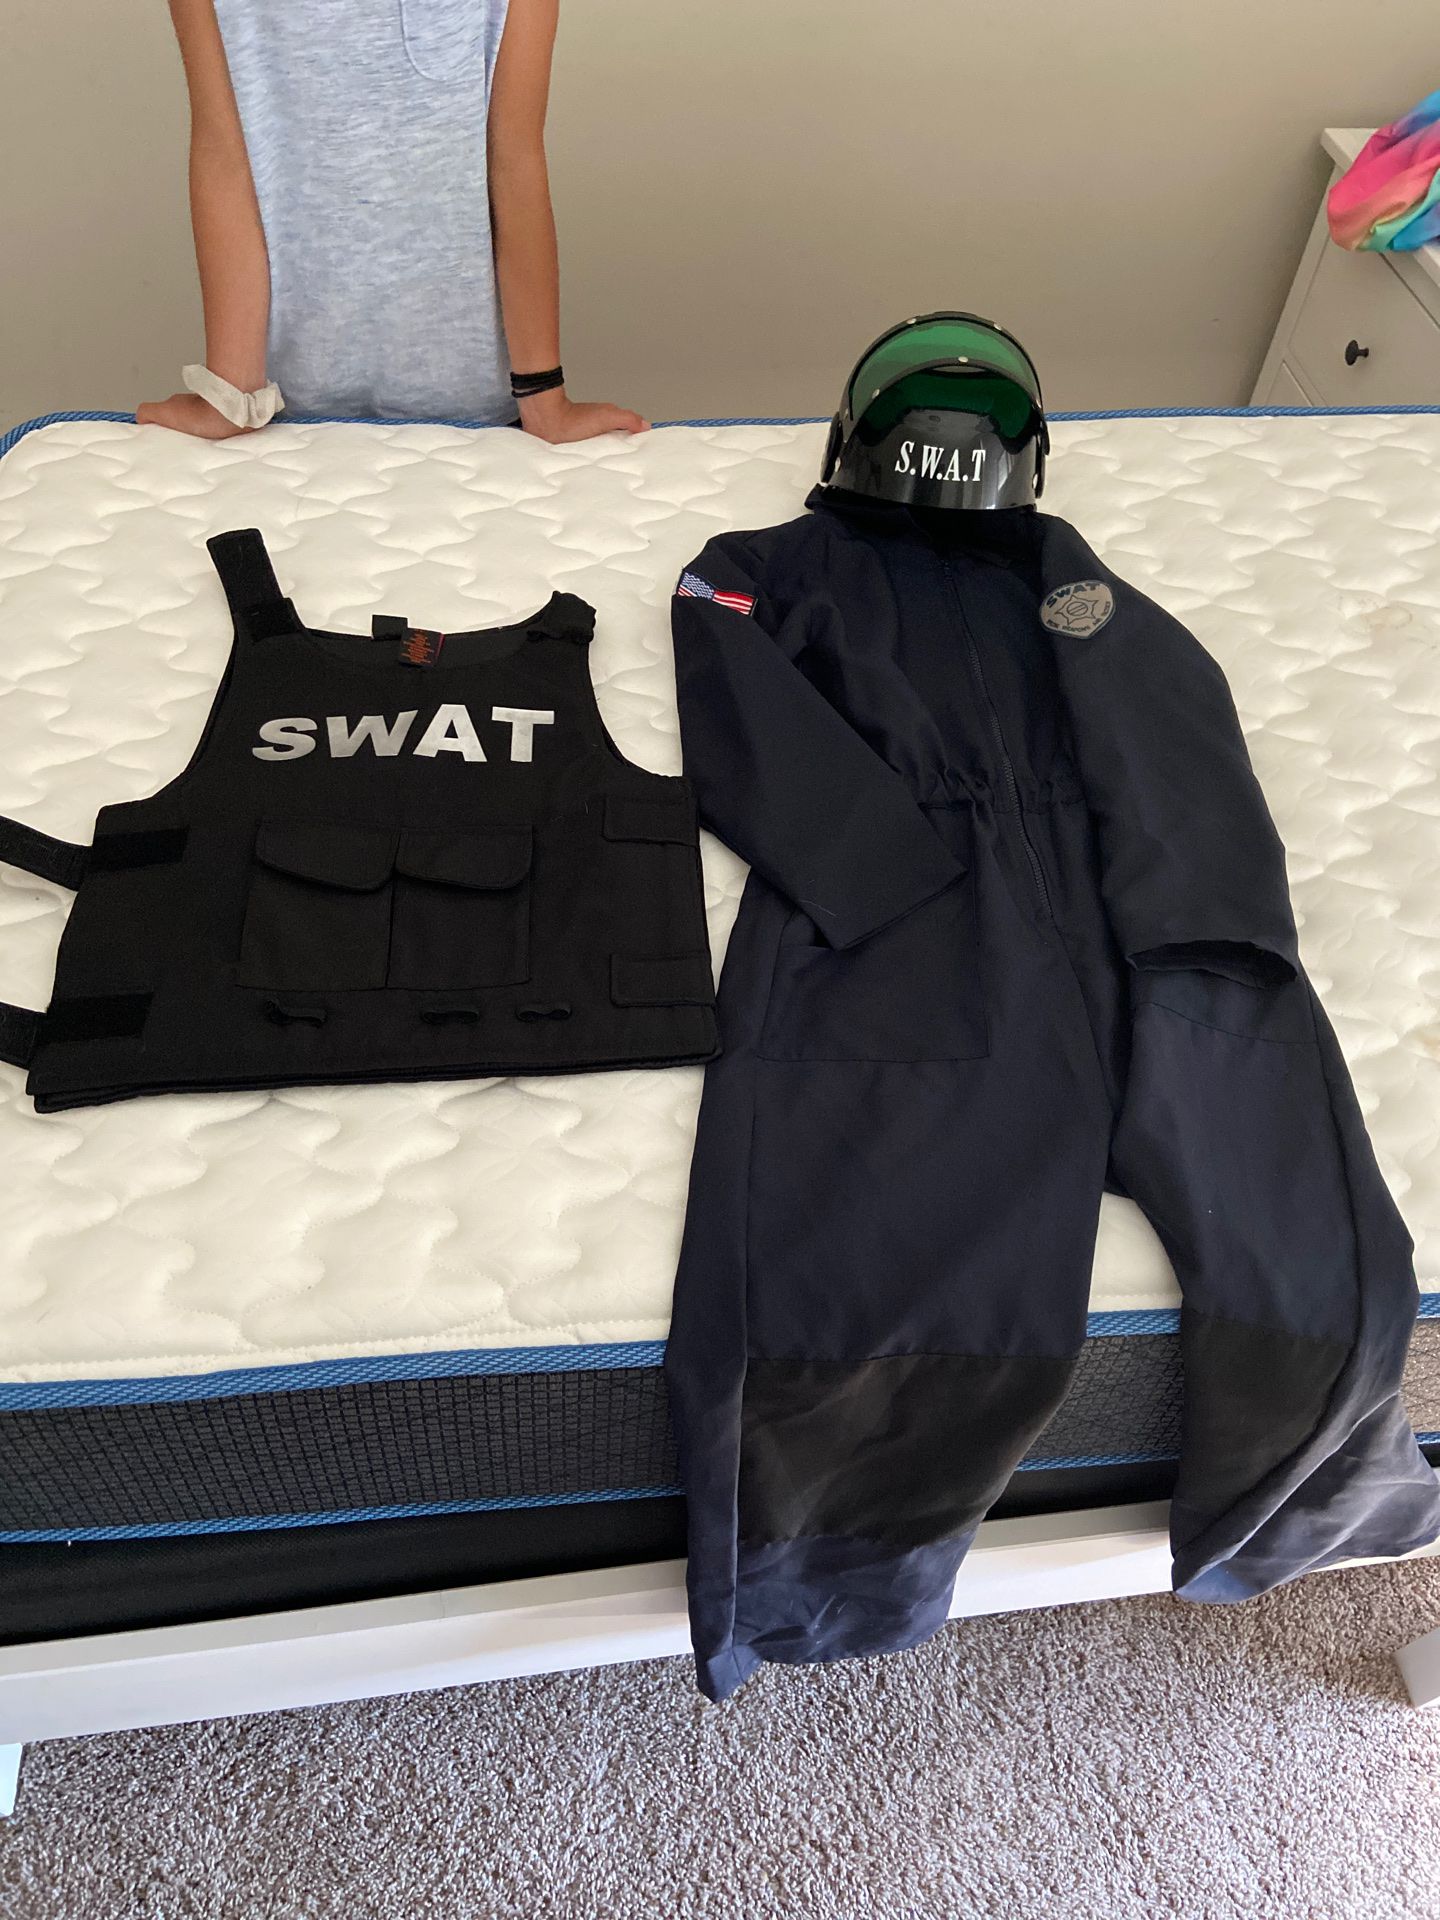 Kids SWAT Costume size small (8)